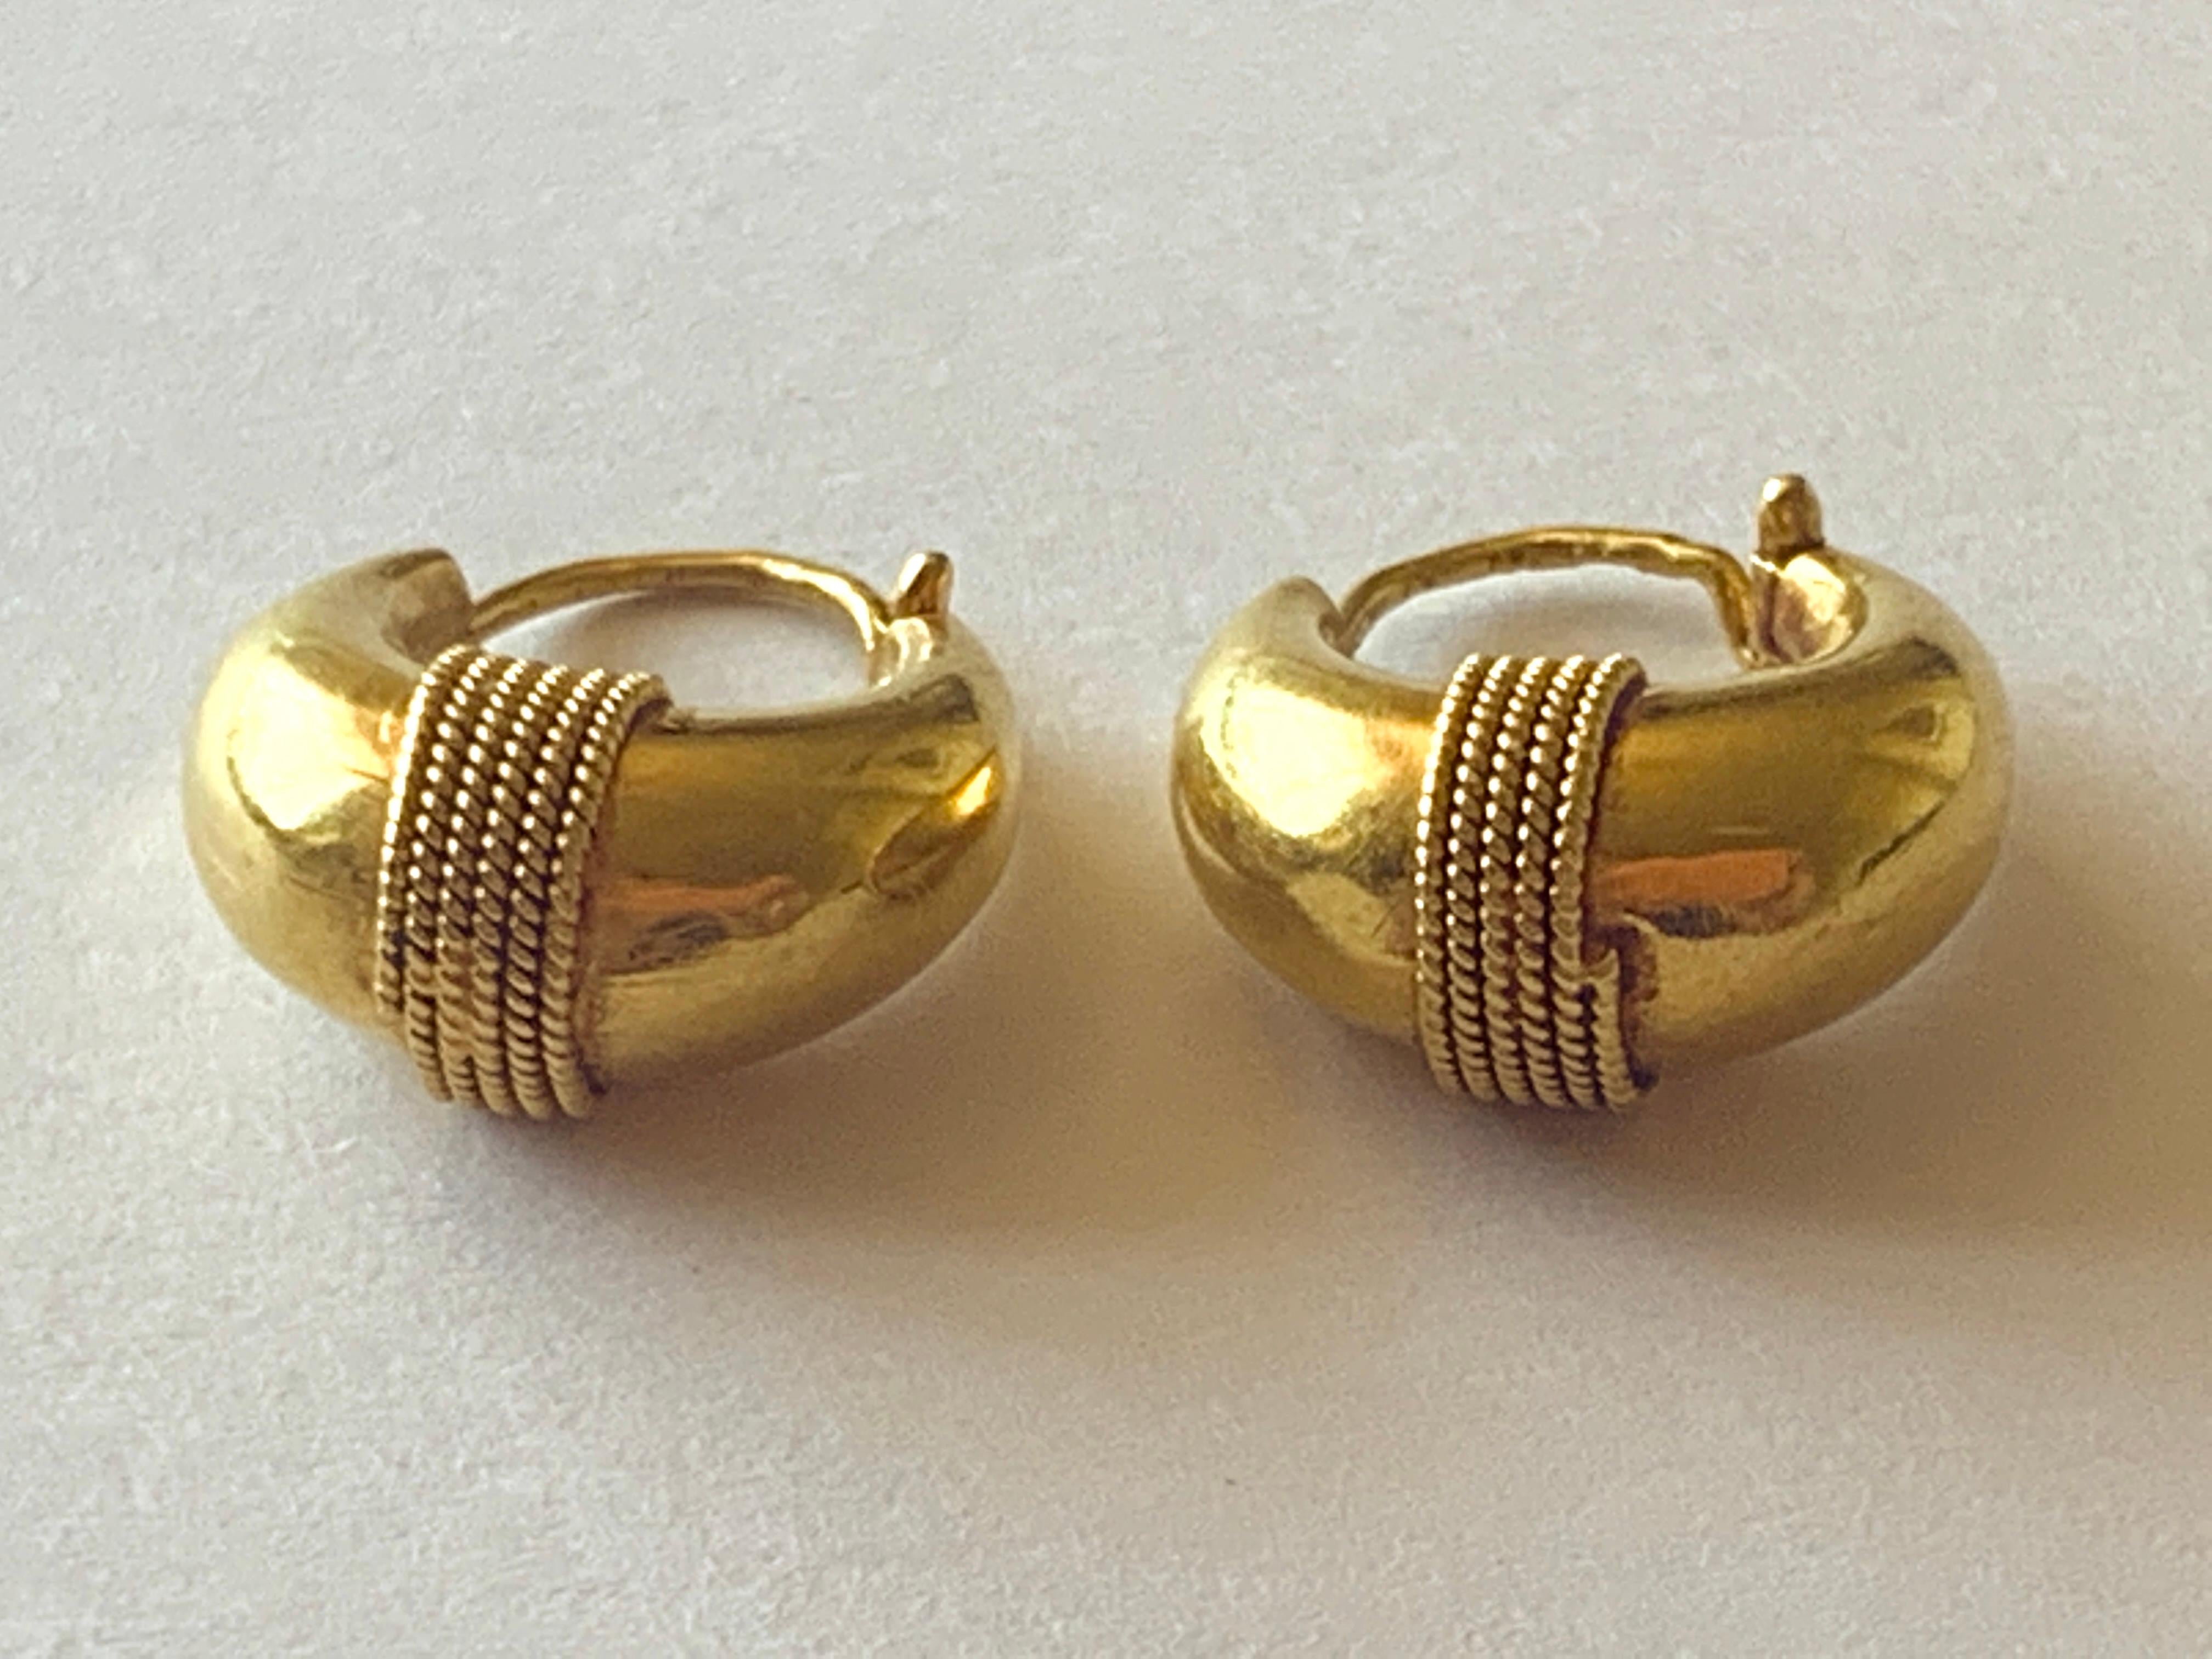 earrings 22k yellow gold antique vintage look handmade yellow gold earrings for women